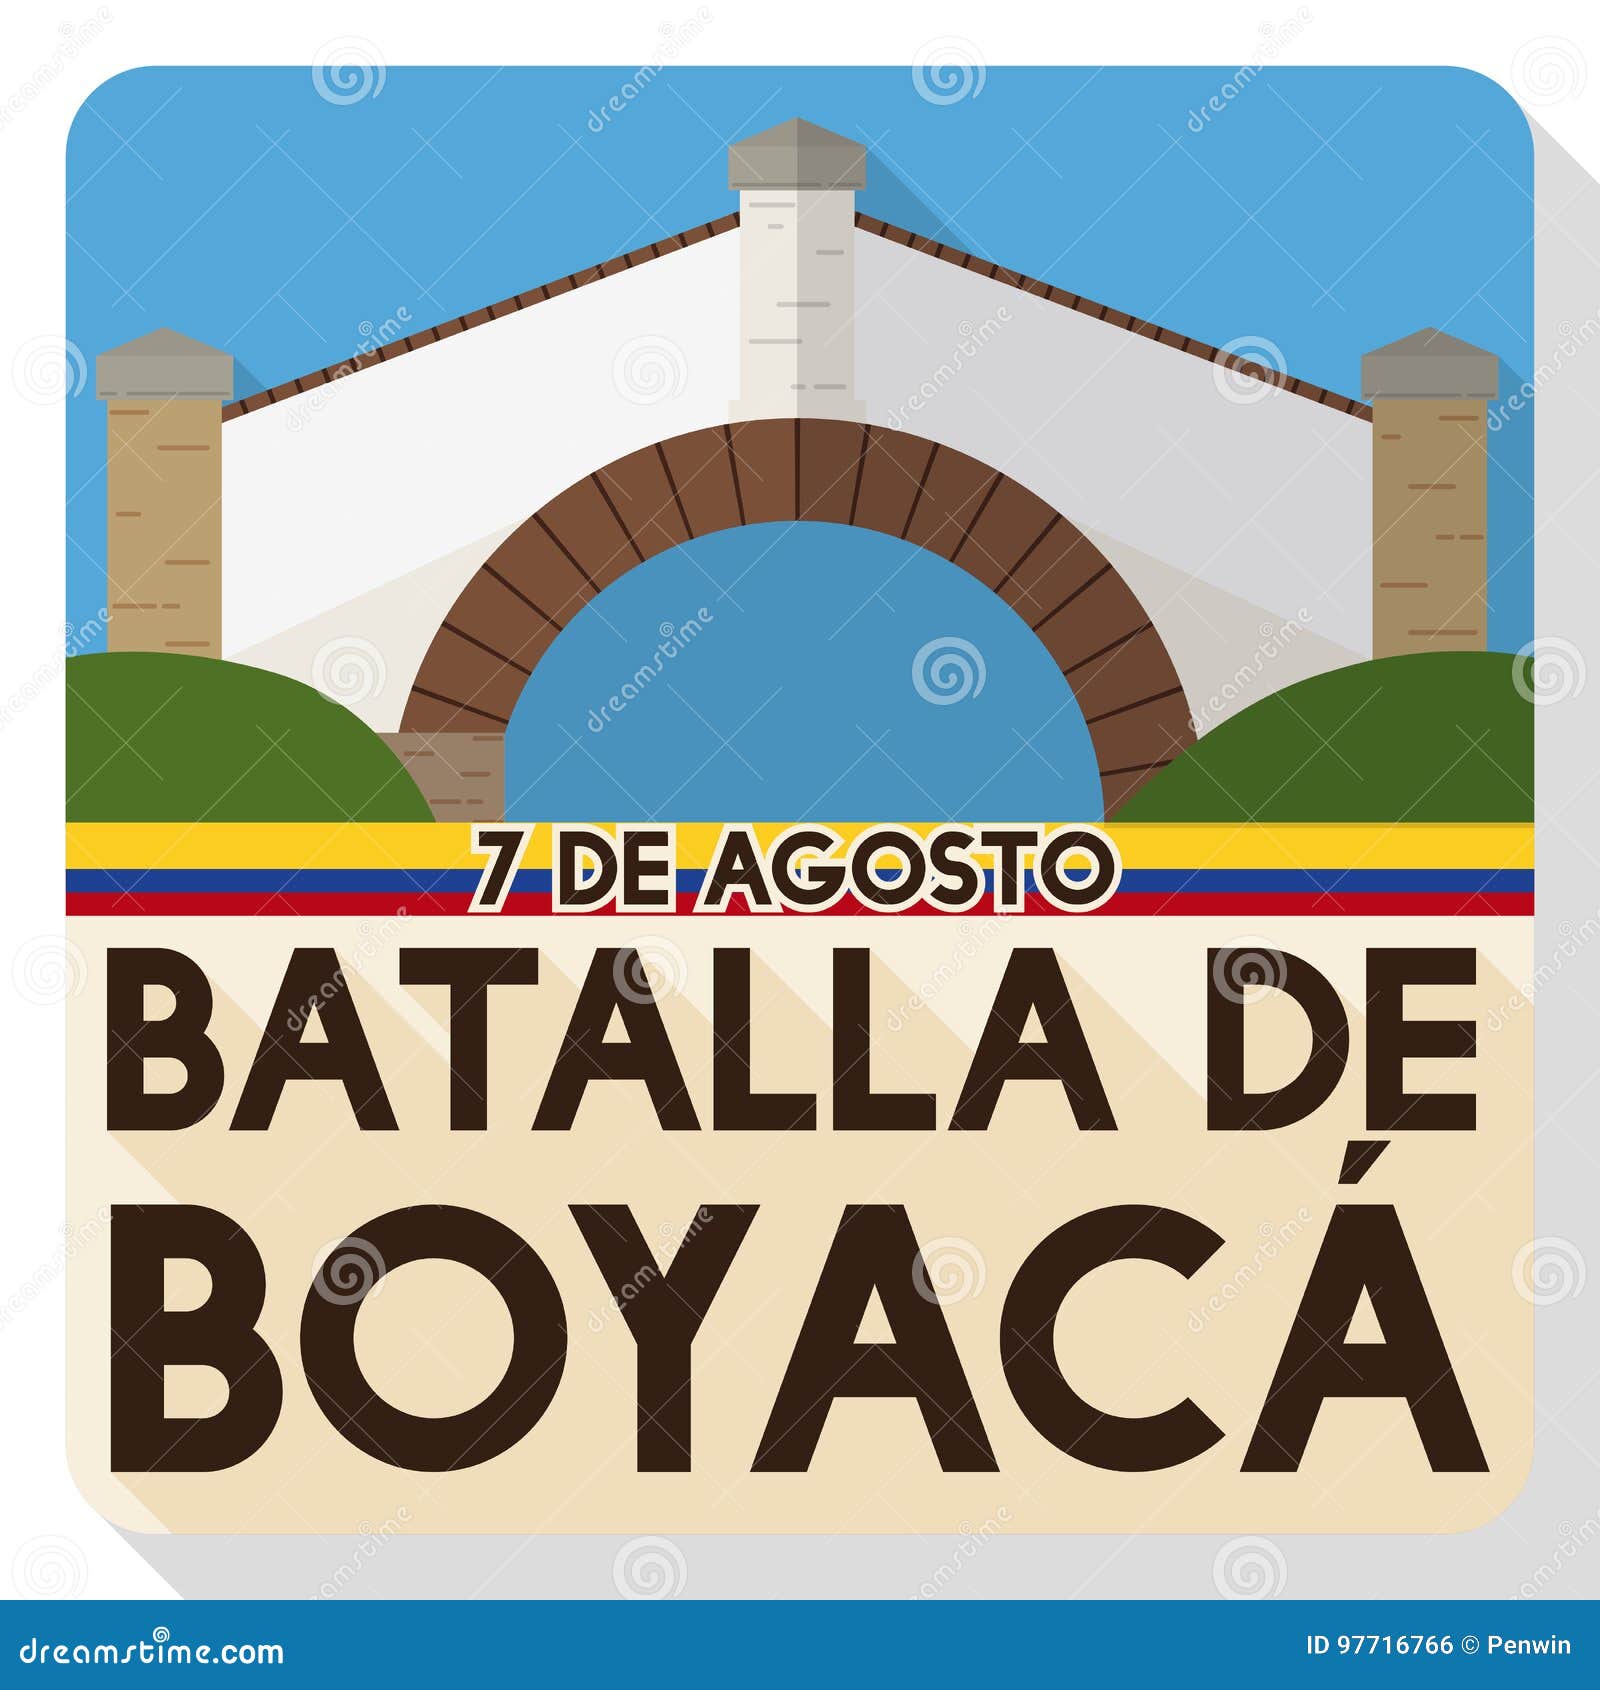 flat  commemorating boyaca`s battle with colombian boyaca bridge landmark,  